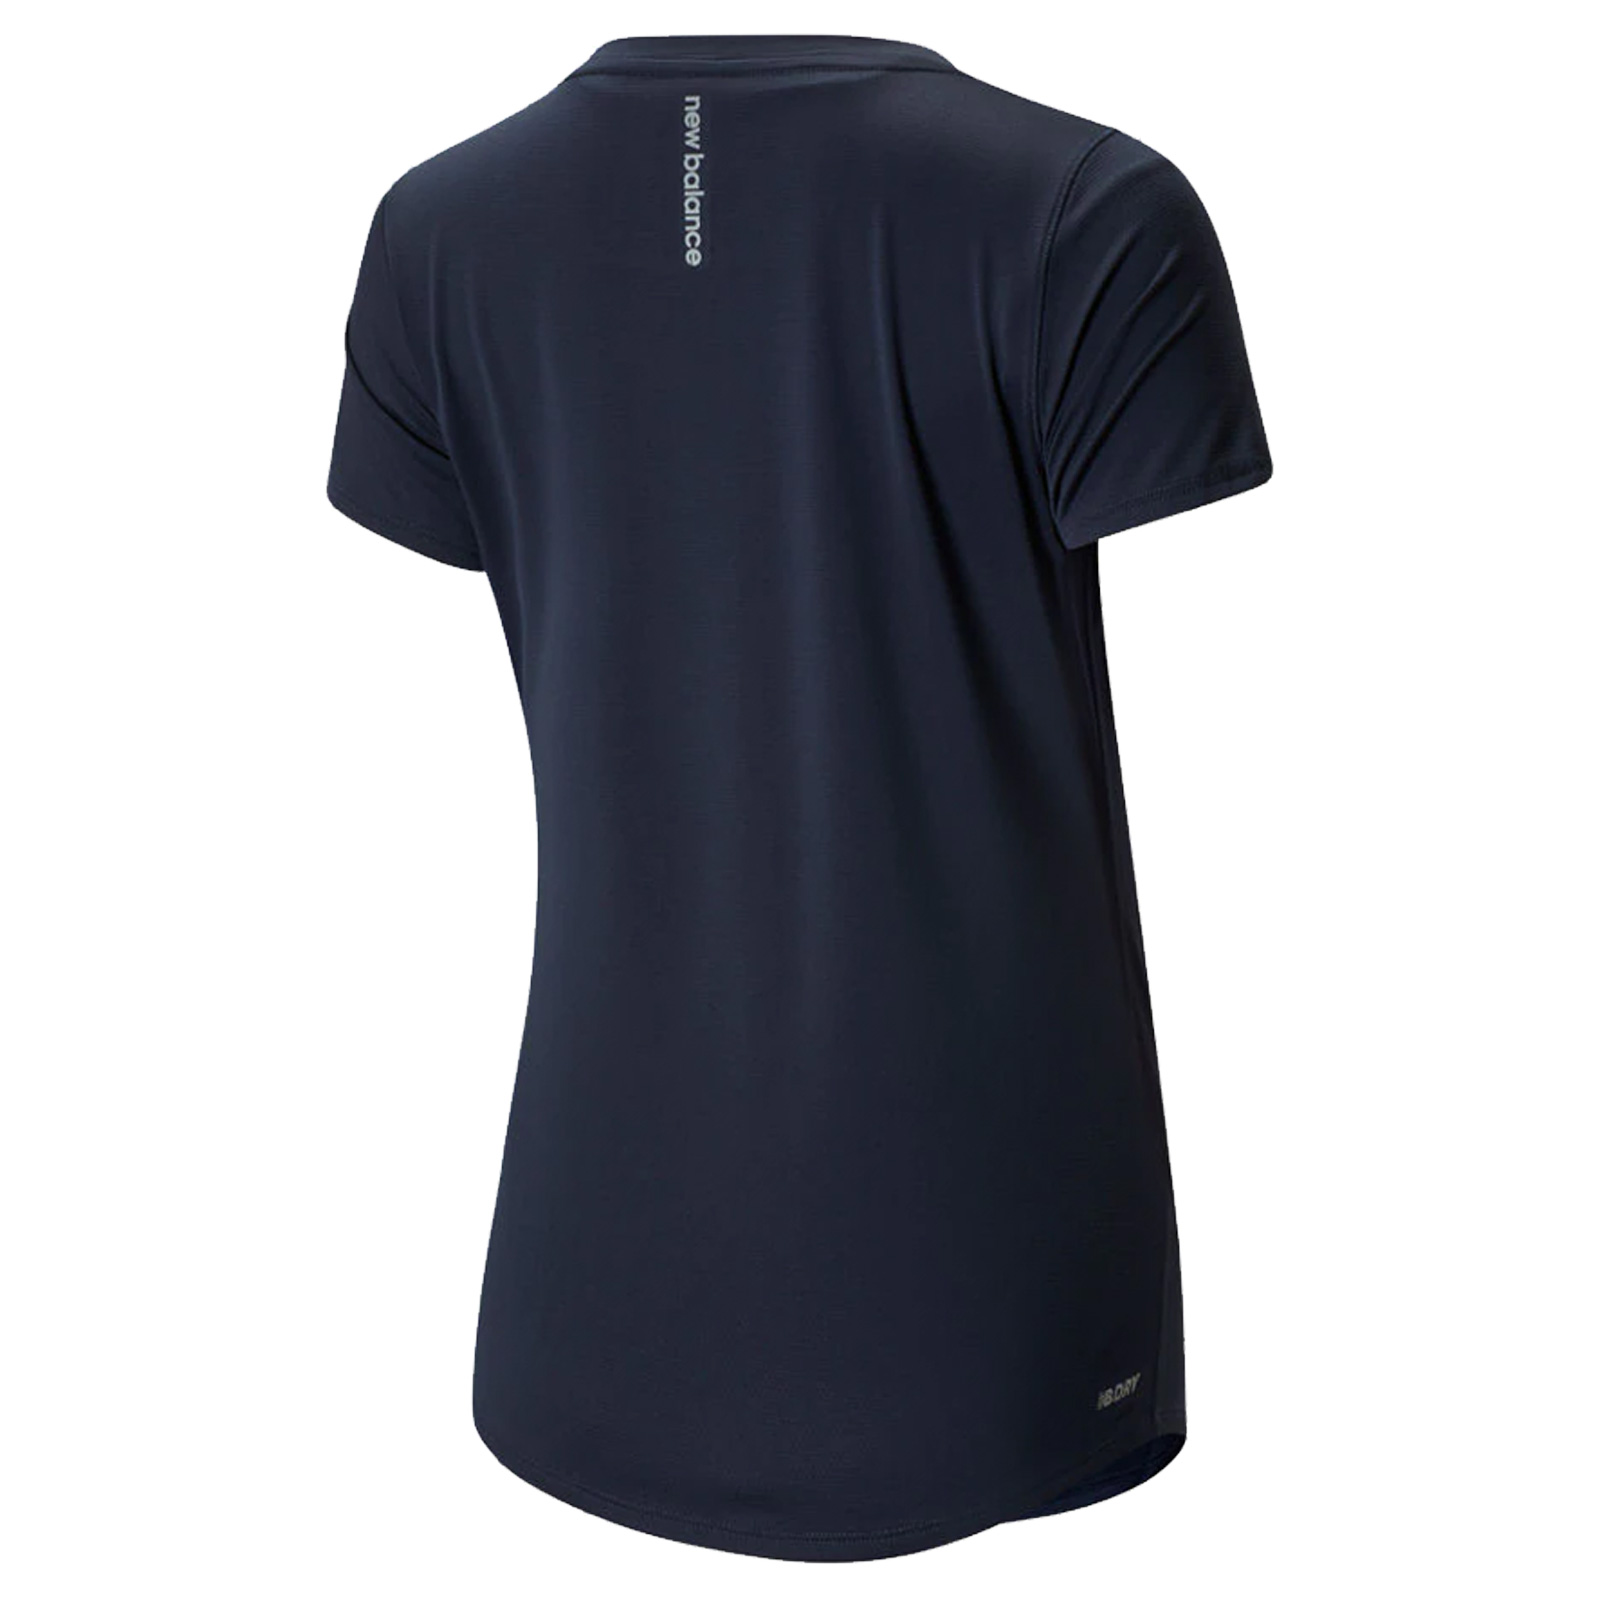 New Balance Ladies Accelerate V2 T-Shirt - Gym Wear Running Training ...